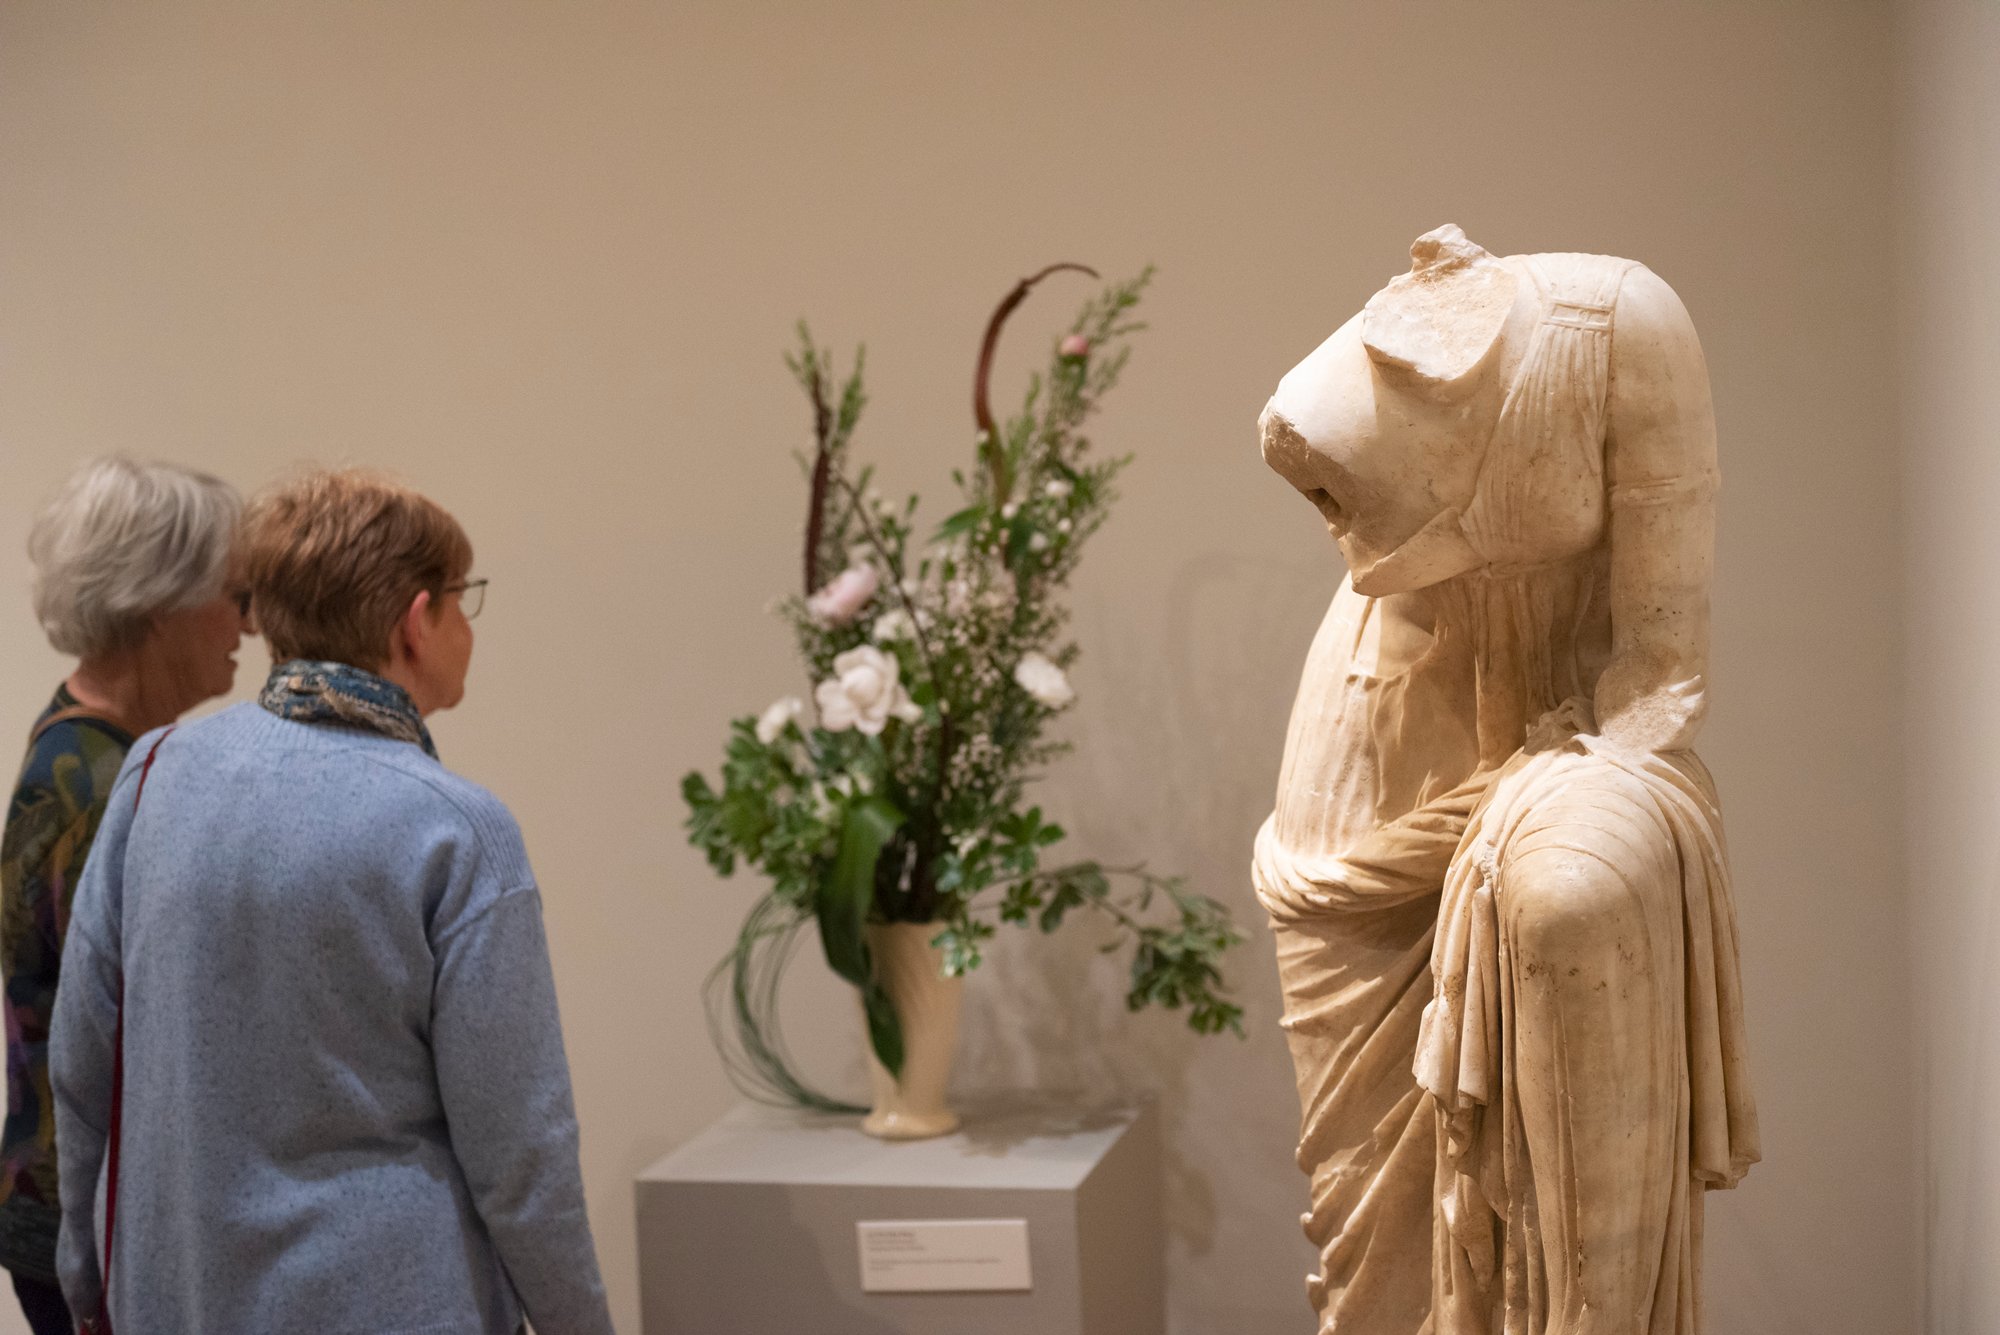 Two women look at a marble sculpture and a floral arrangement interpretation